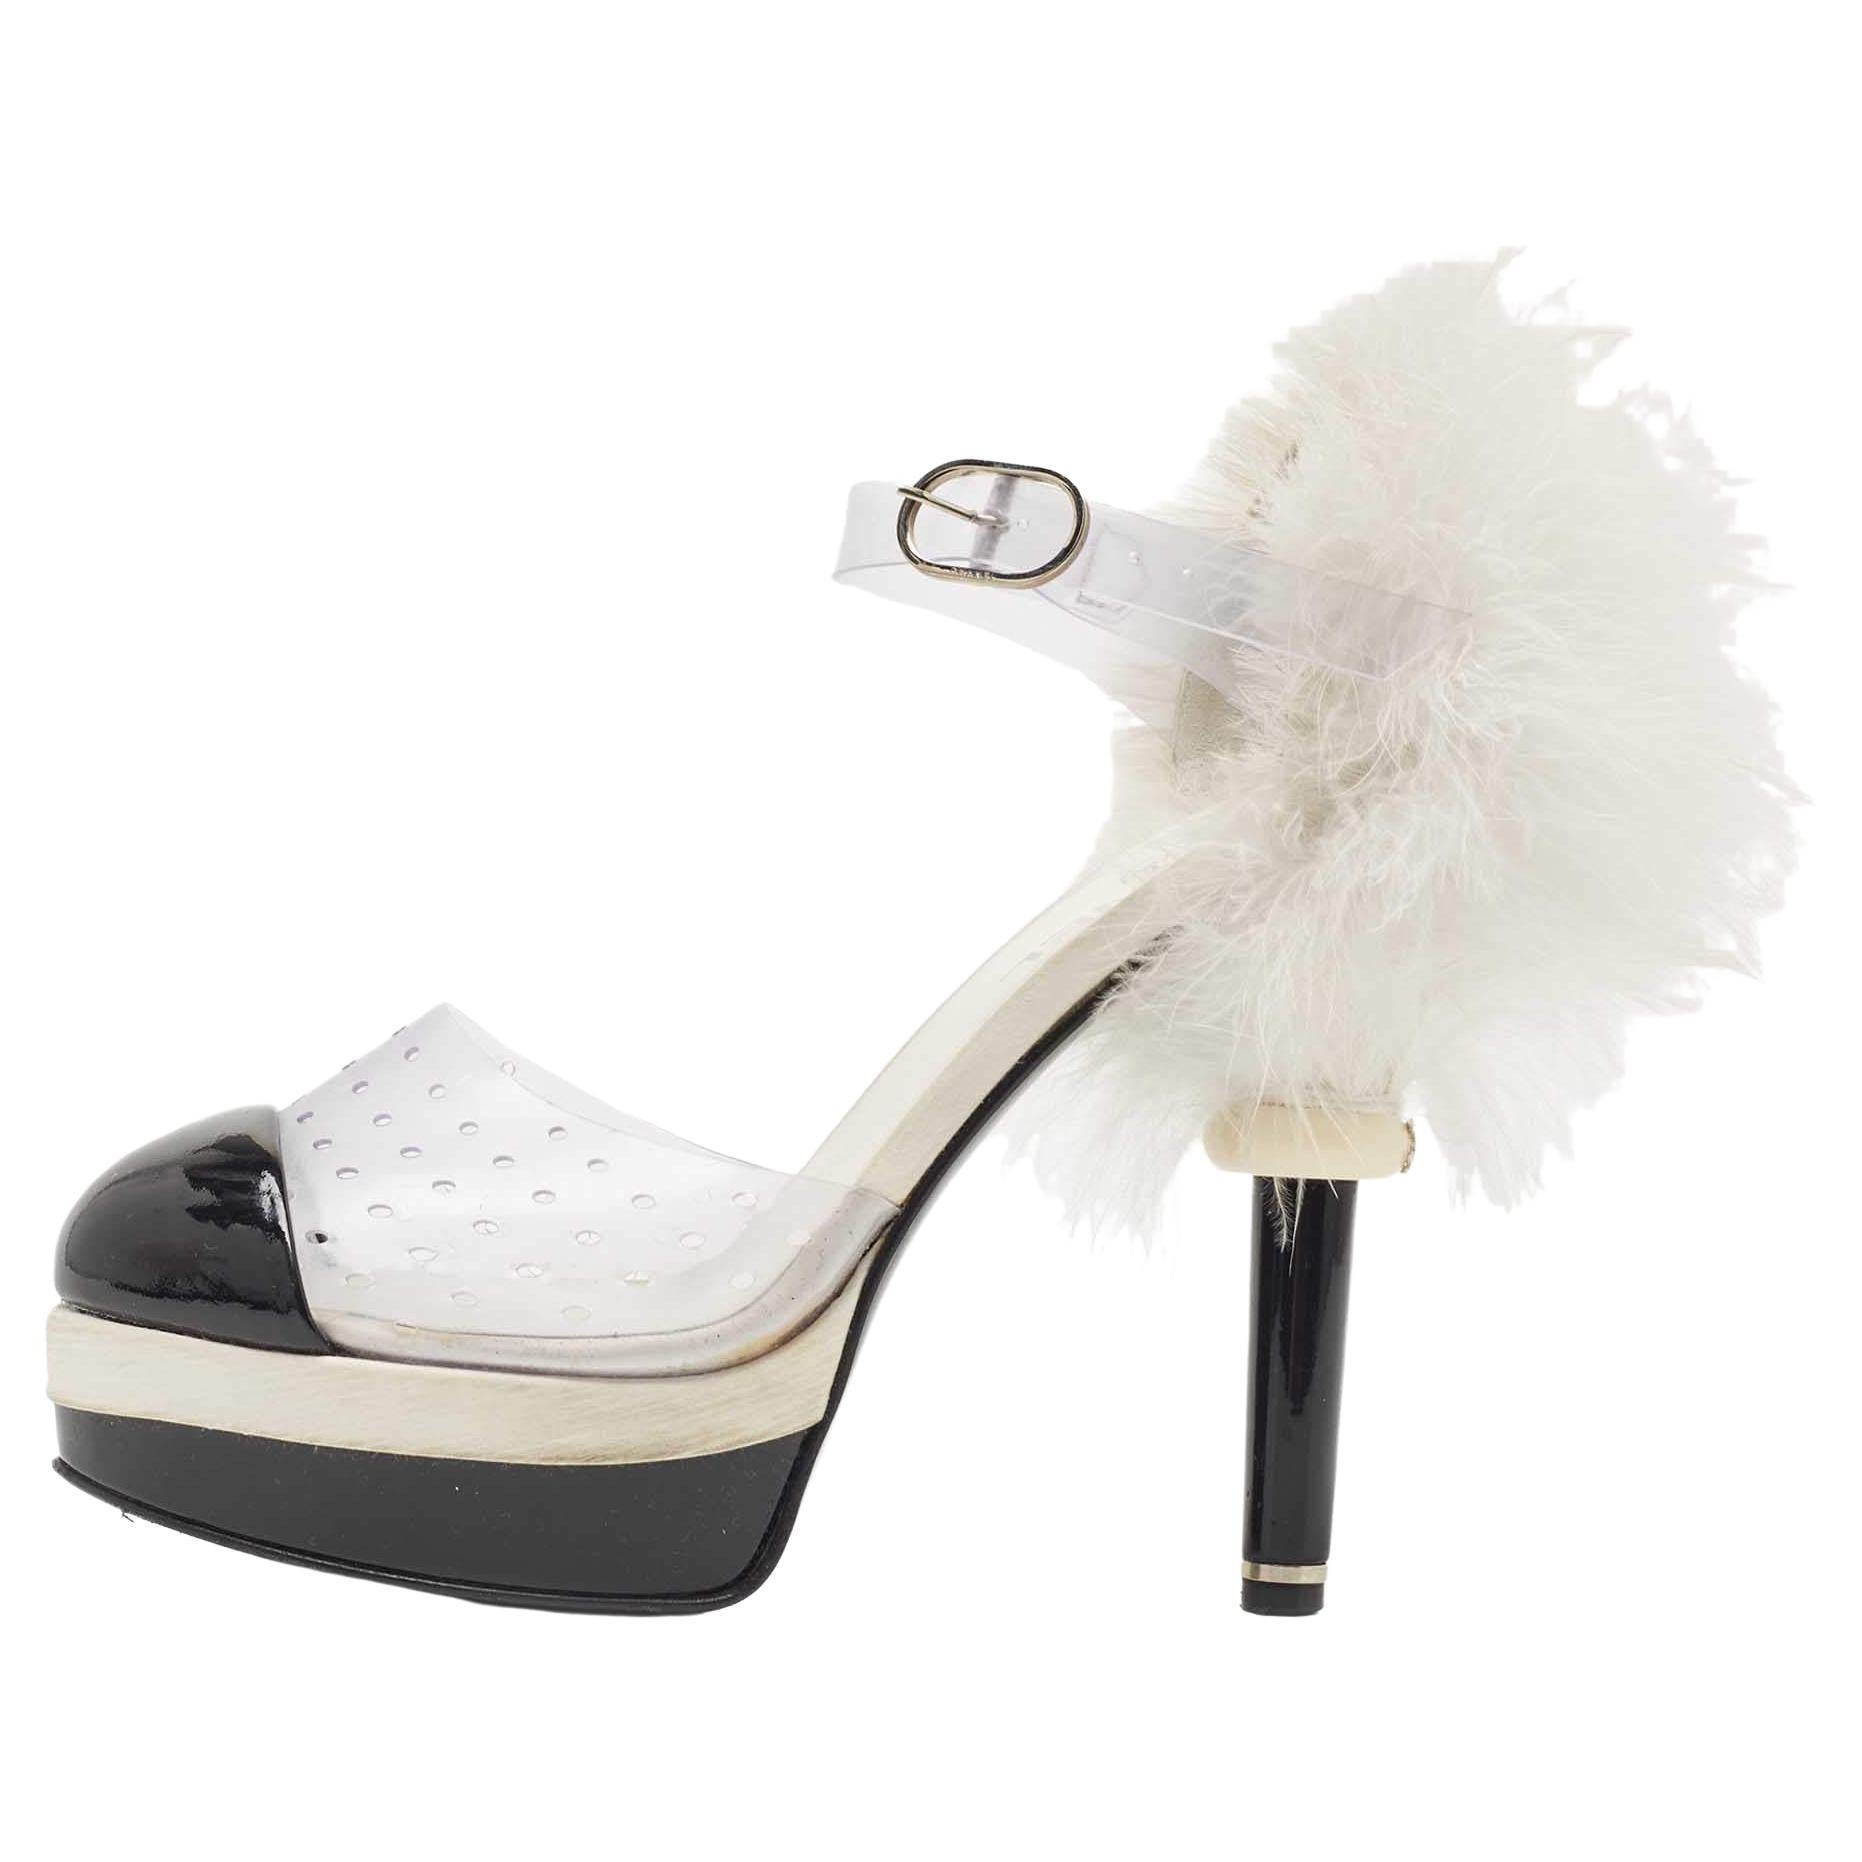 Chanel Tricolor PVC and Patent Cap Toe Ankle Strap Sandals Size 38